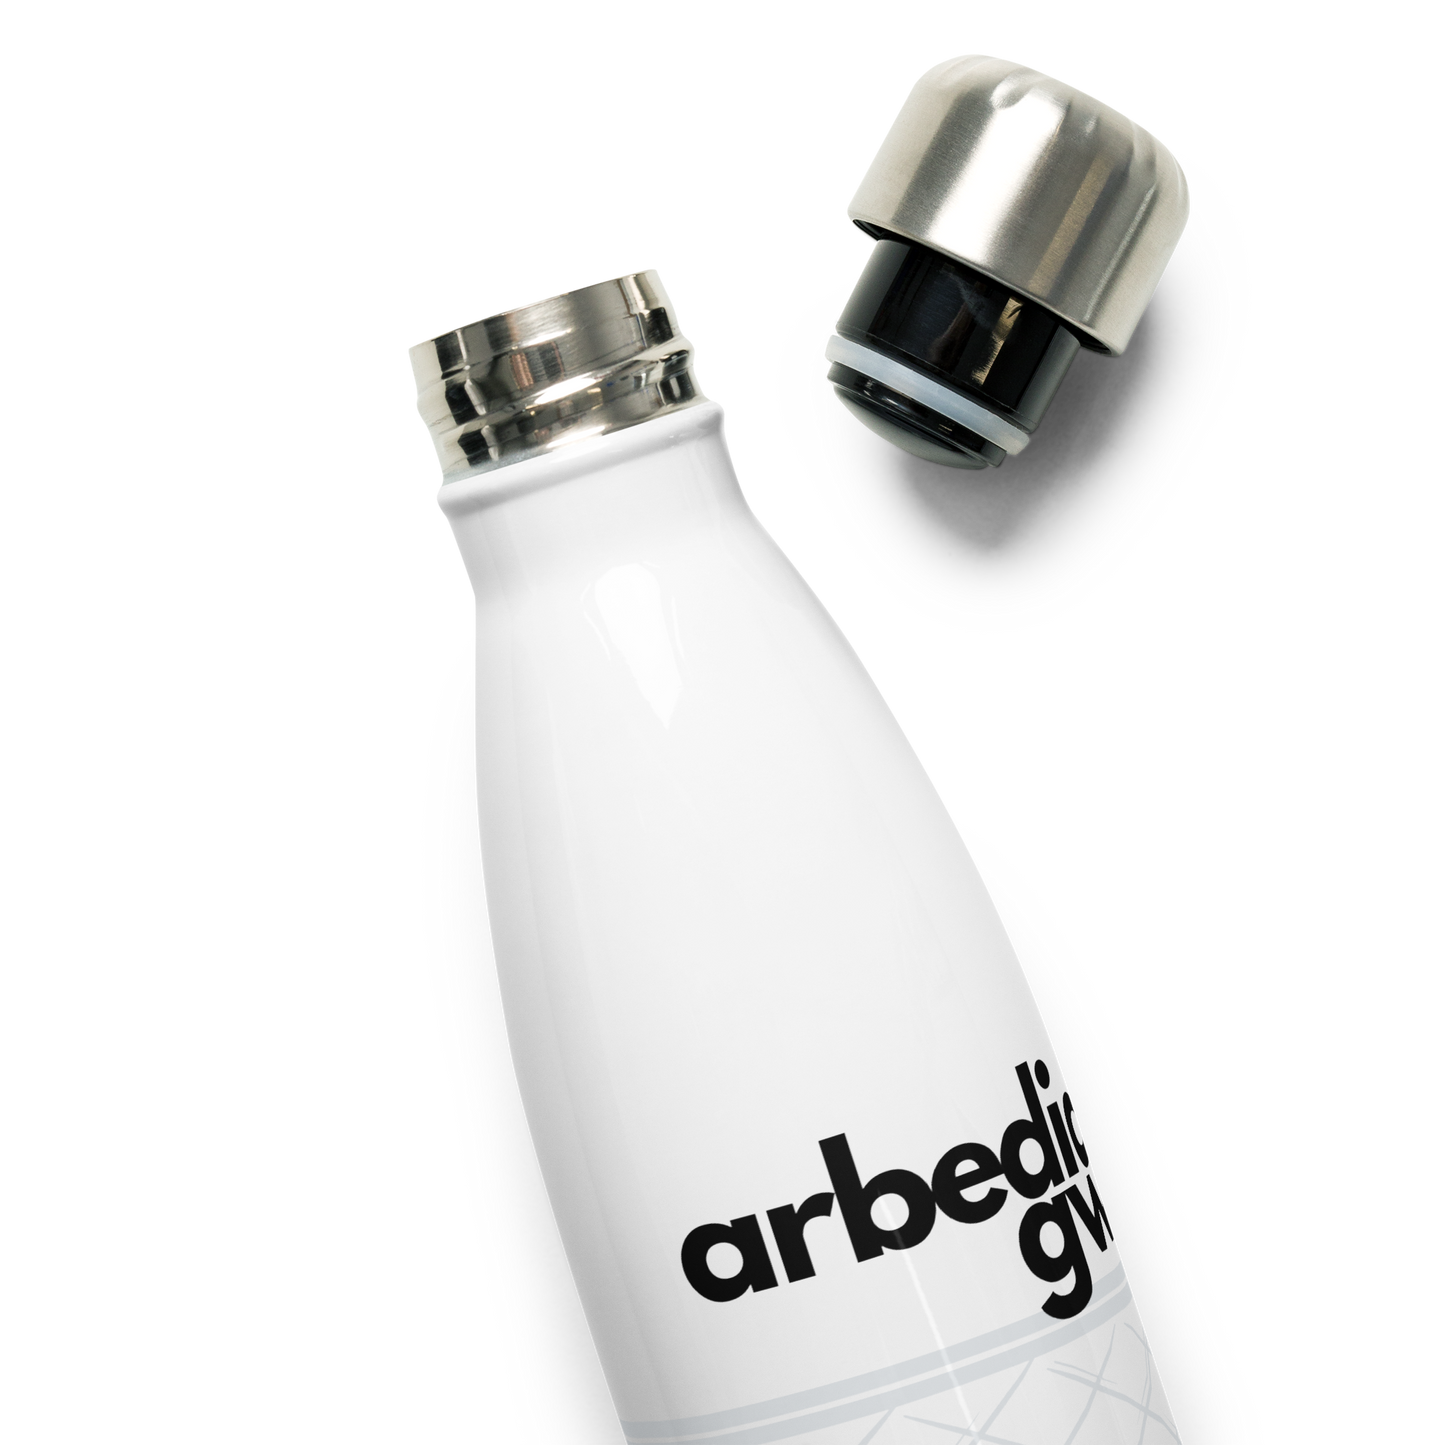 Arbediad Gwych! - Stainless Steel Water Bottle